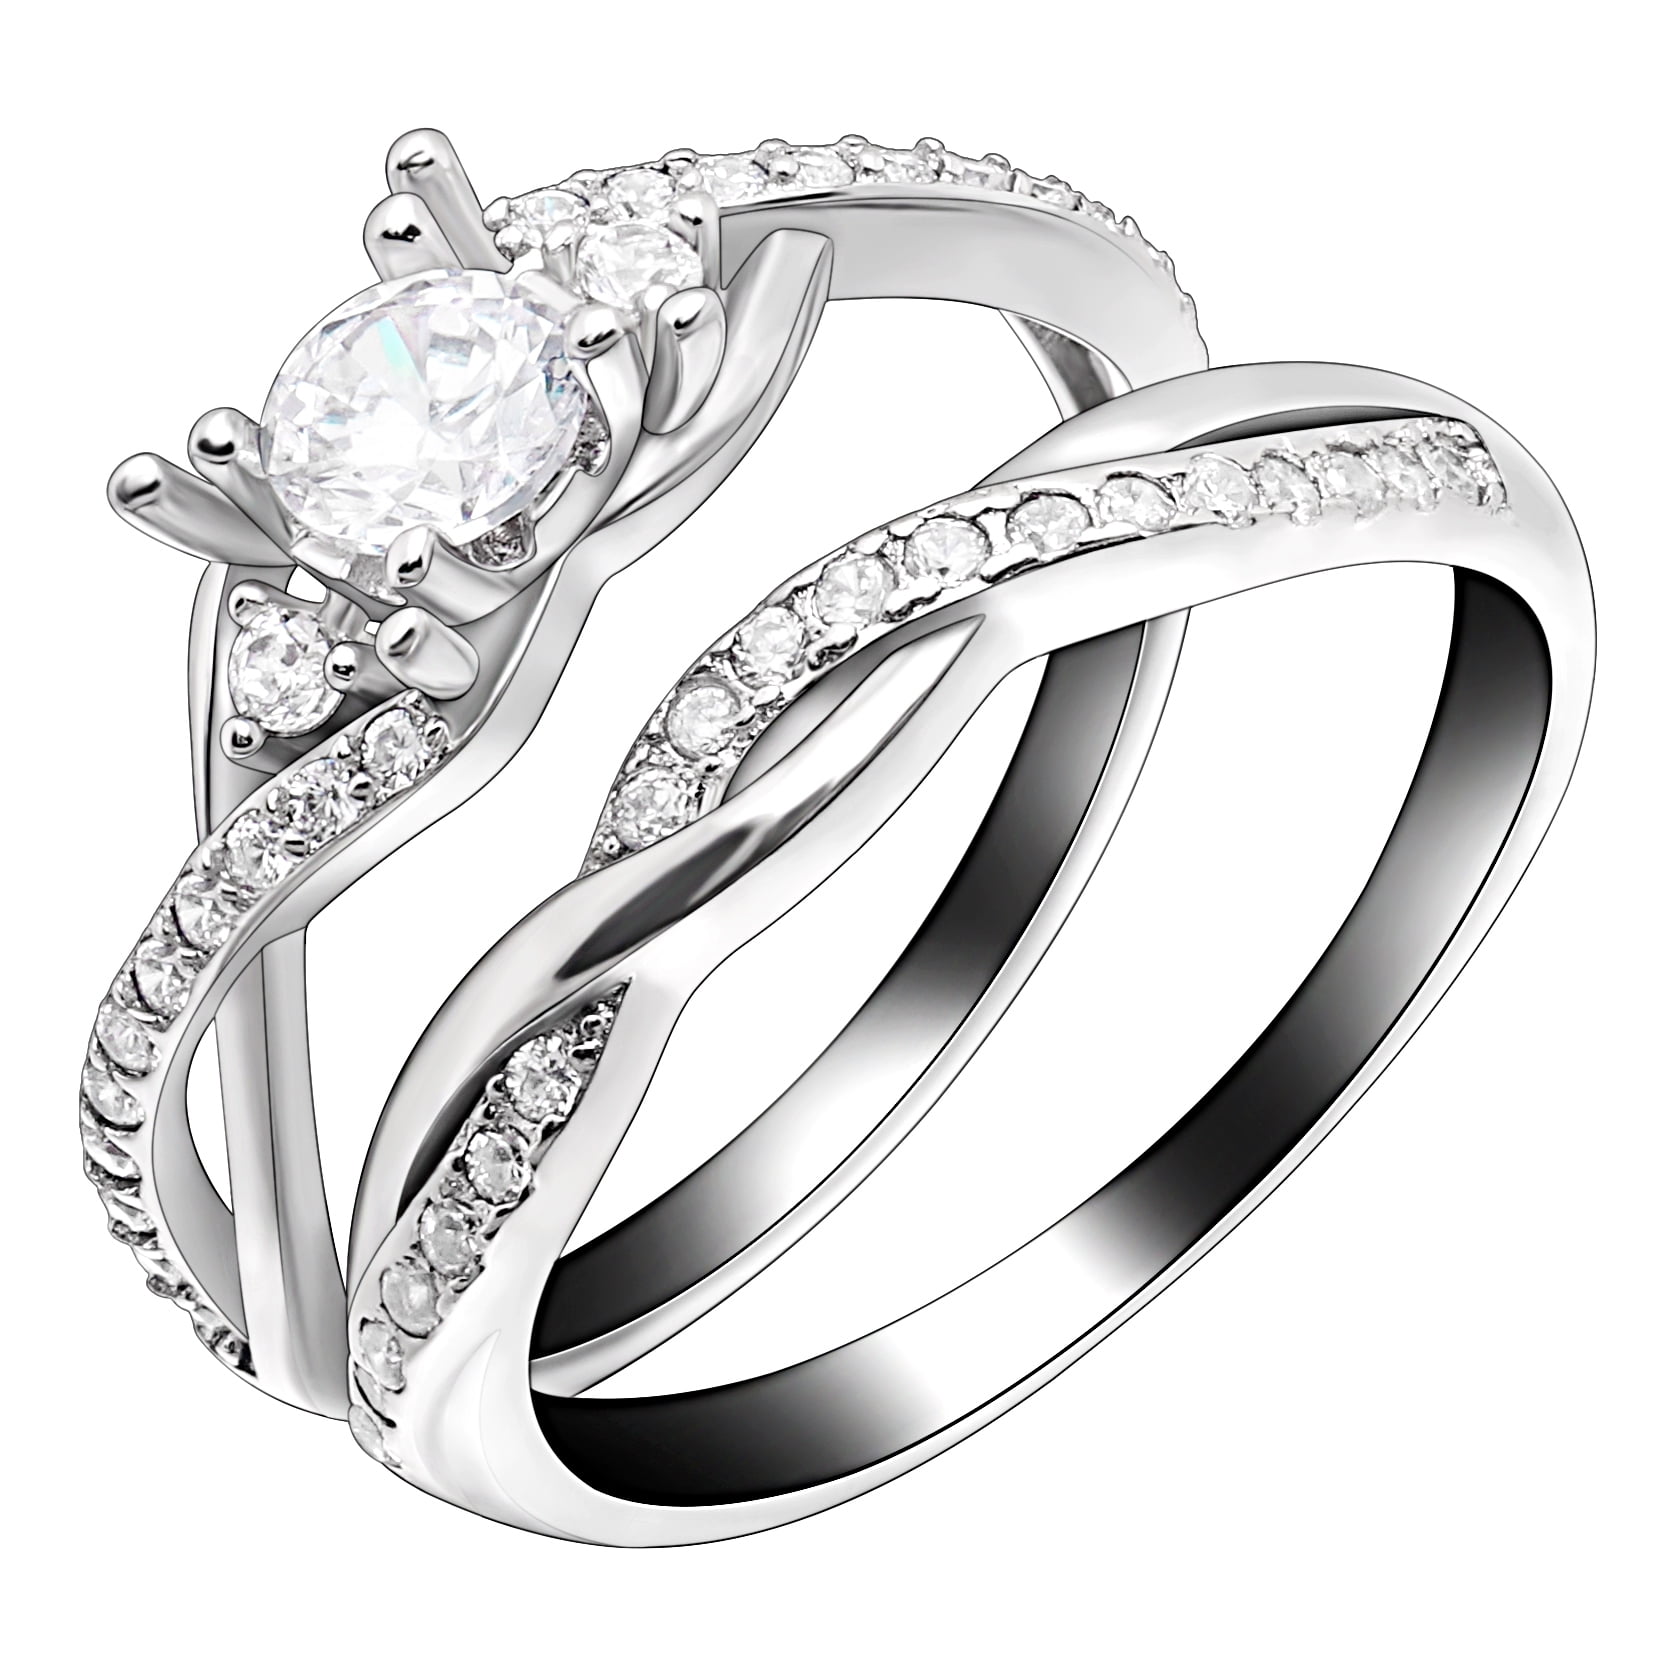 Sterling Silver 925 BRIDAL WEDDING SET EMERALD CUT DESIGN CZ RING 10MM SIZE 5-10 